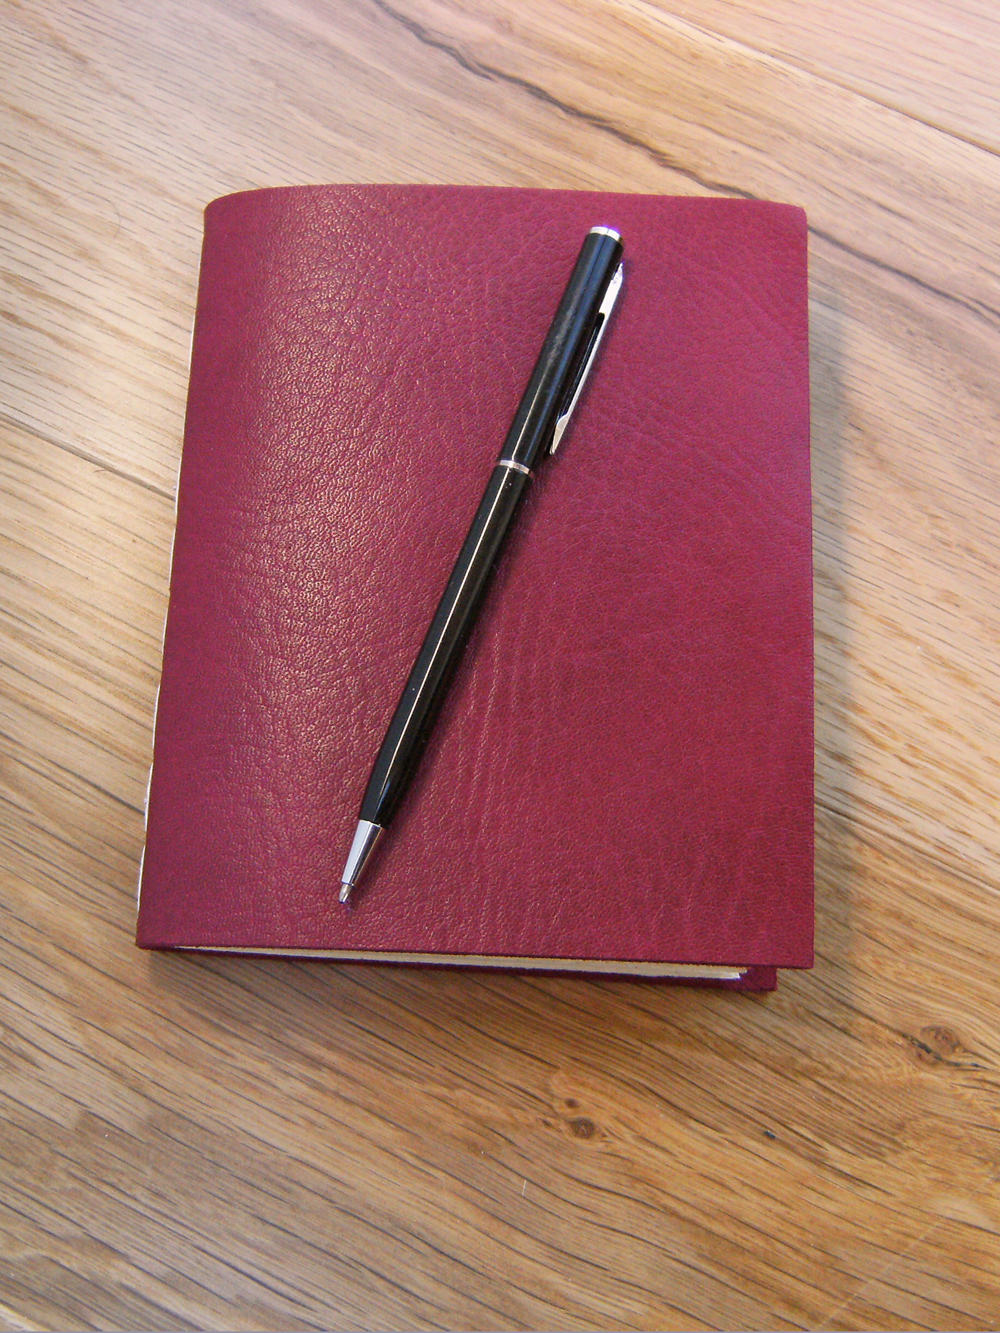 Dear Valentine Leather Journal - Deep Red Chapbook Journal